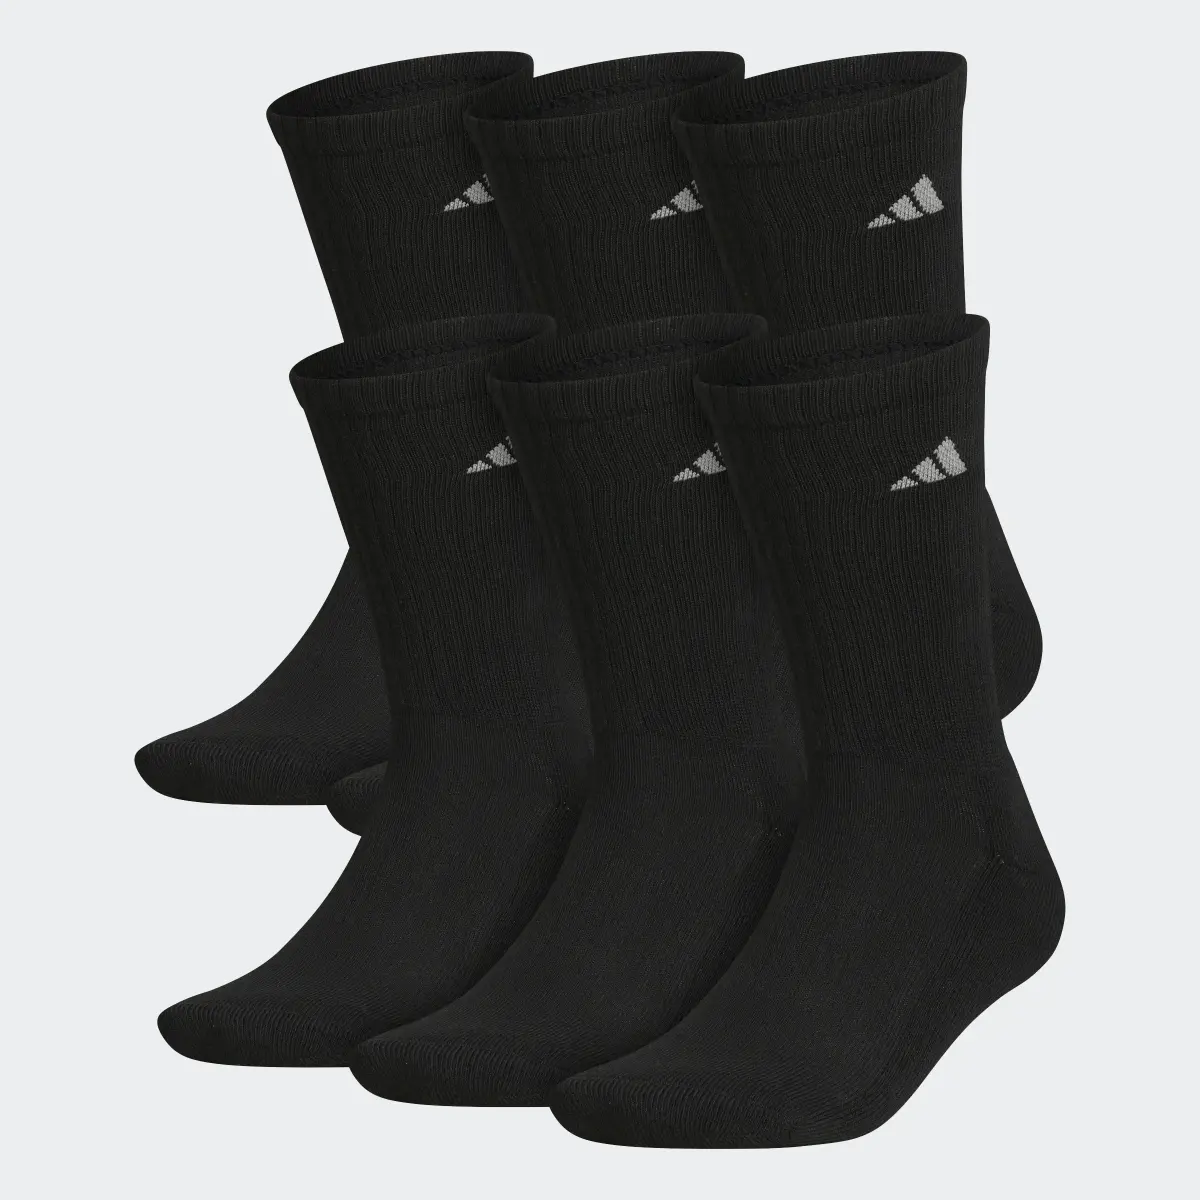 Adidas Athletic Cushioned Crew Socks 6 Pairs. 2